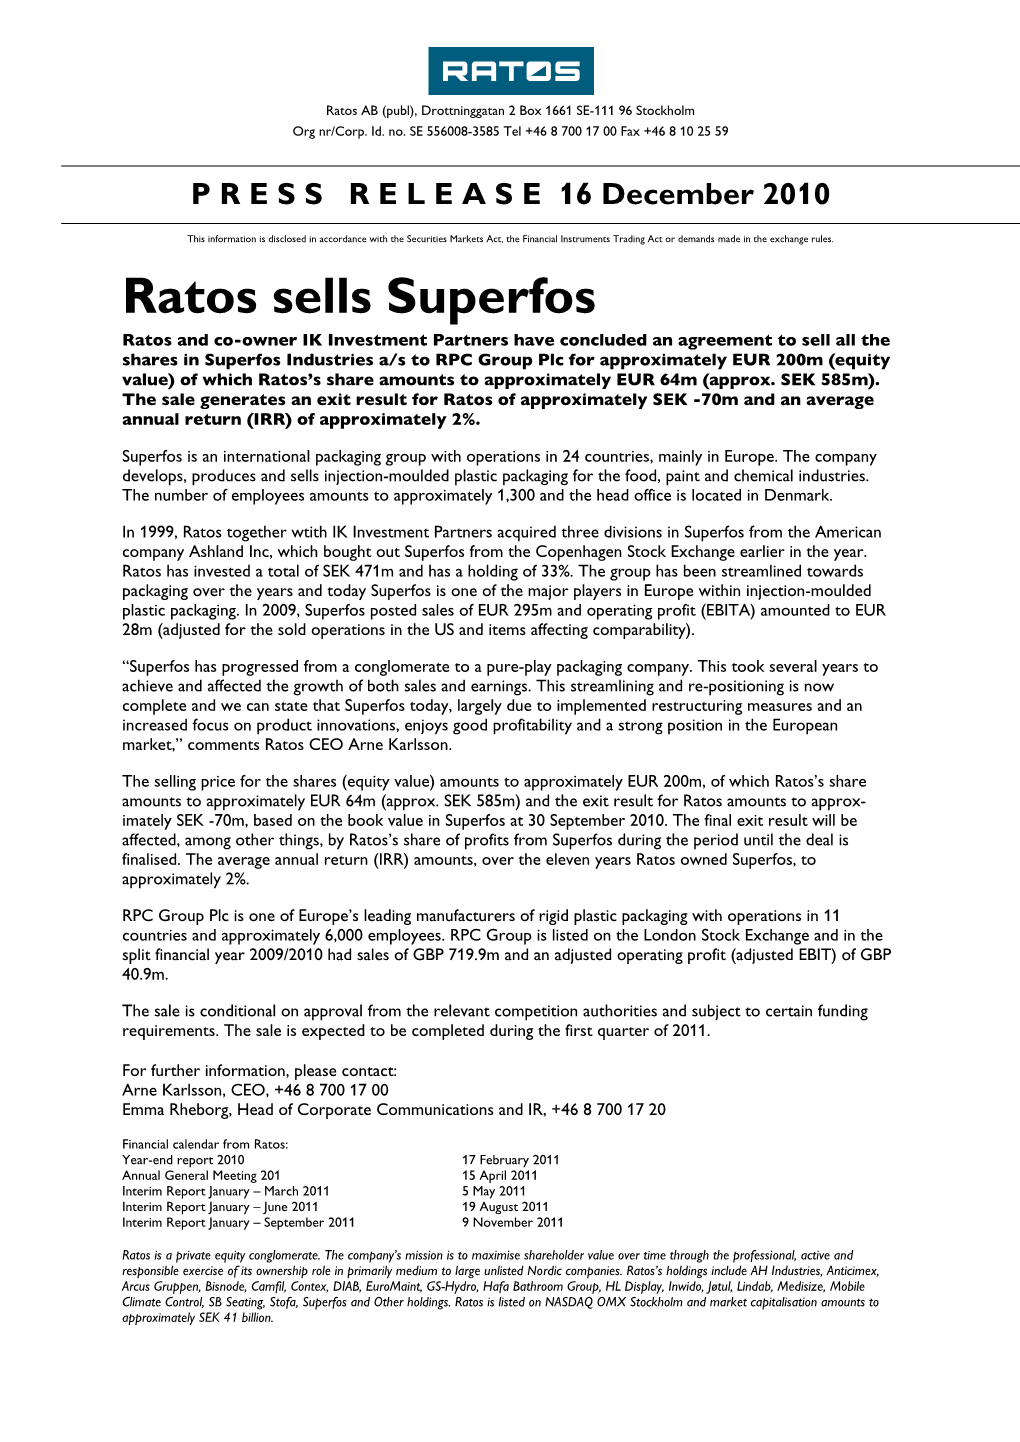 Ratos Sells Superfos